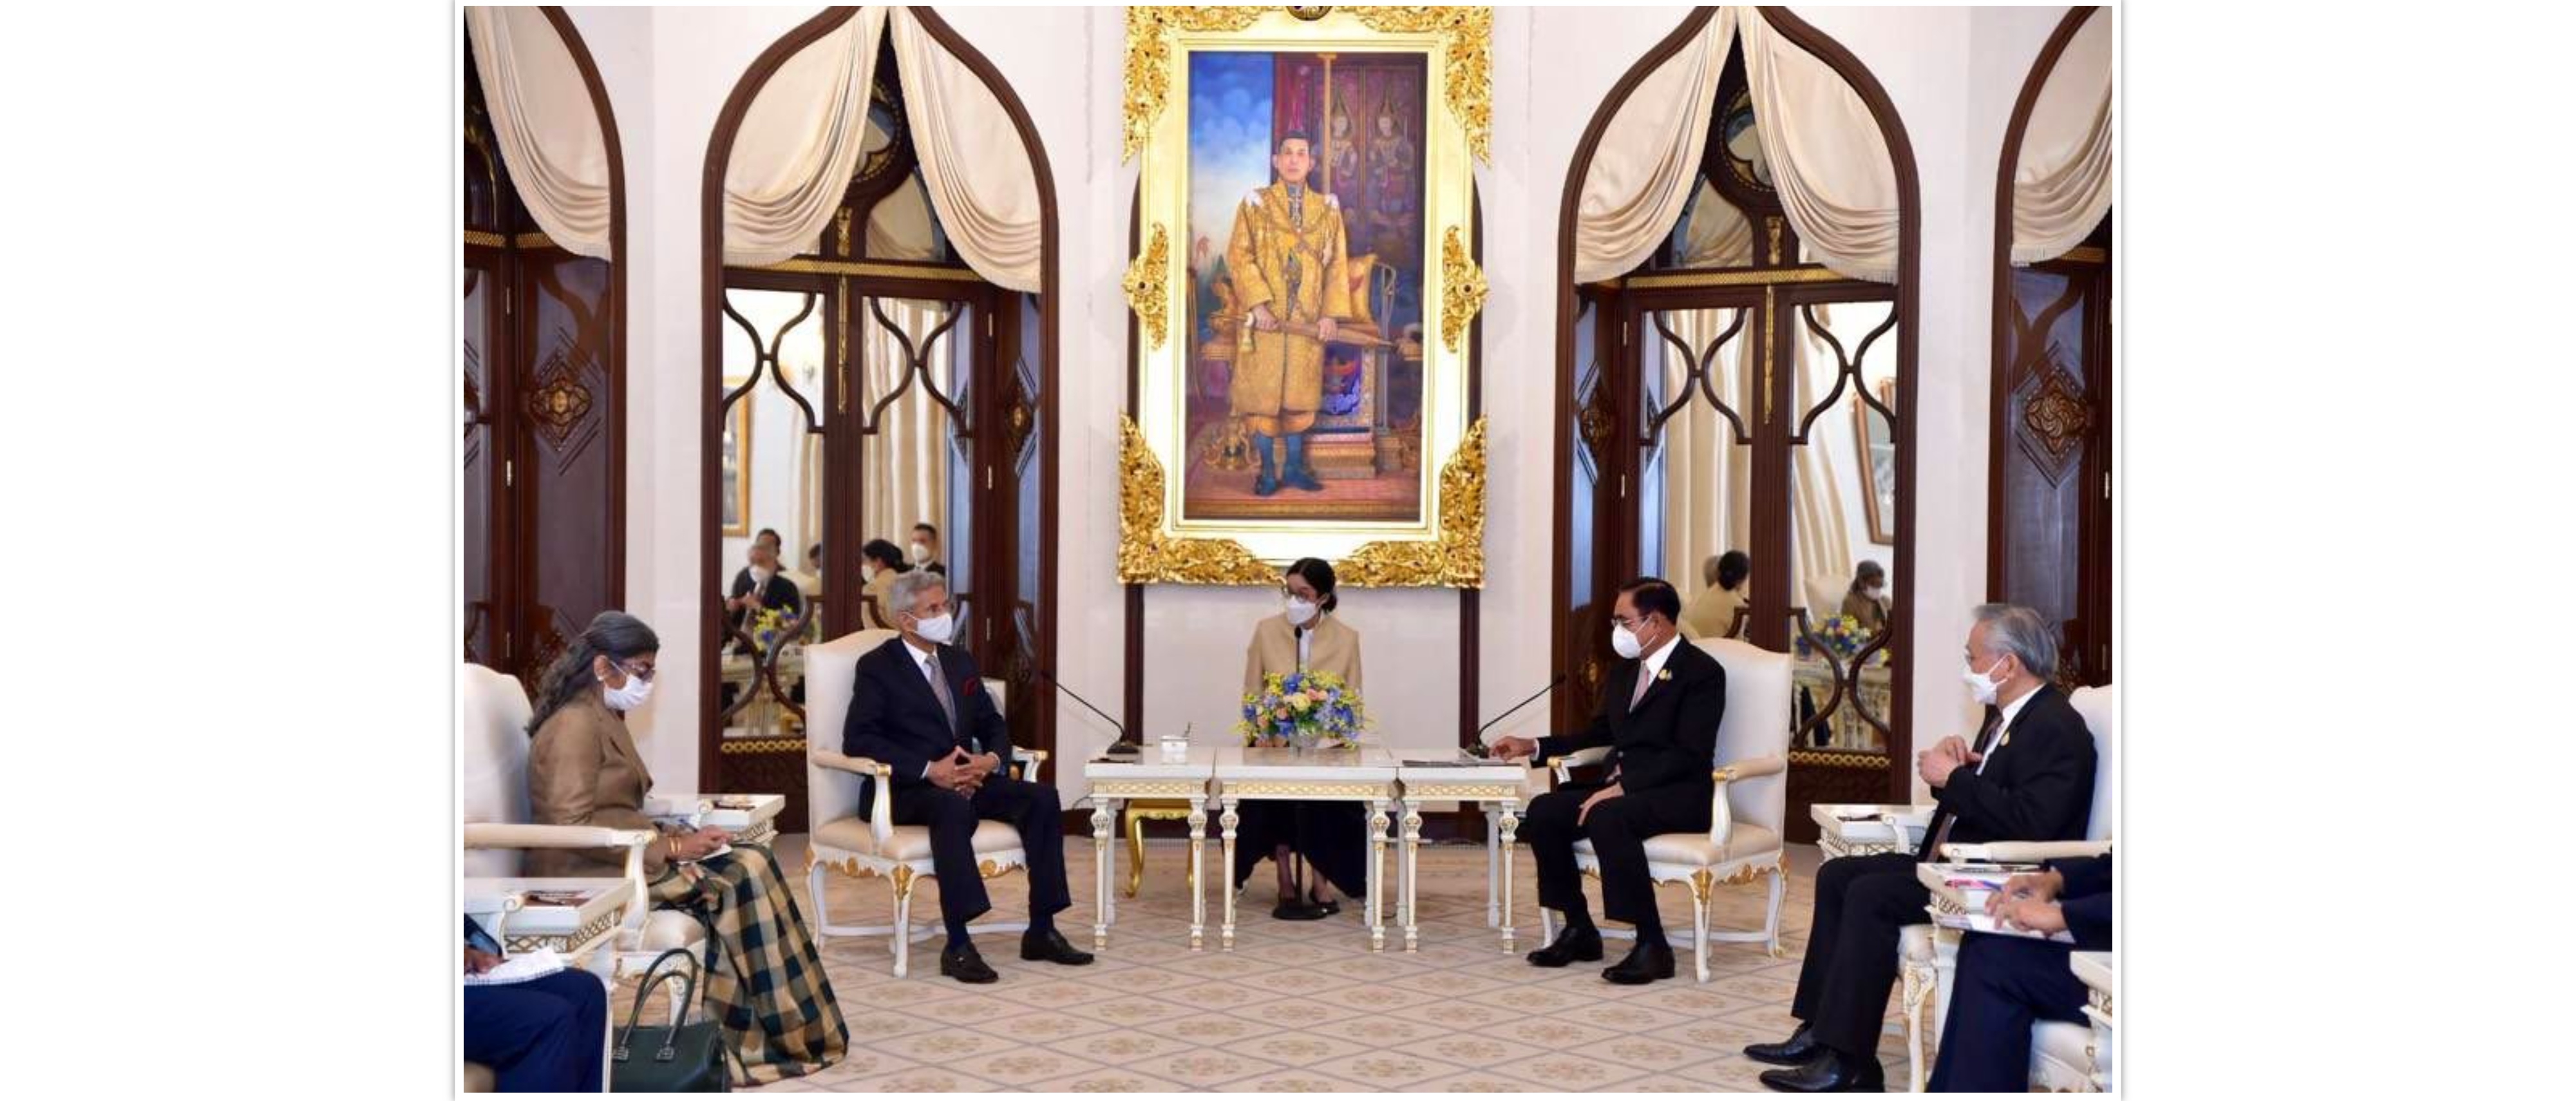  Dr. S. Jaishankar, Hon’ble External Affairs Minister of India paid a courtesy call on Gen. Prayut Chan-o-cha, Prime Minister of Thailand 